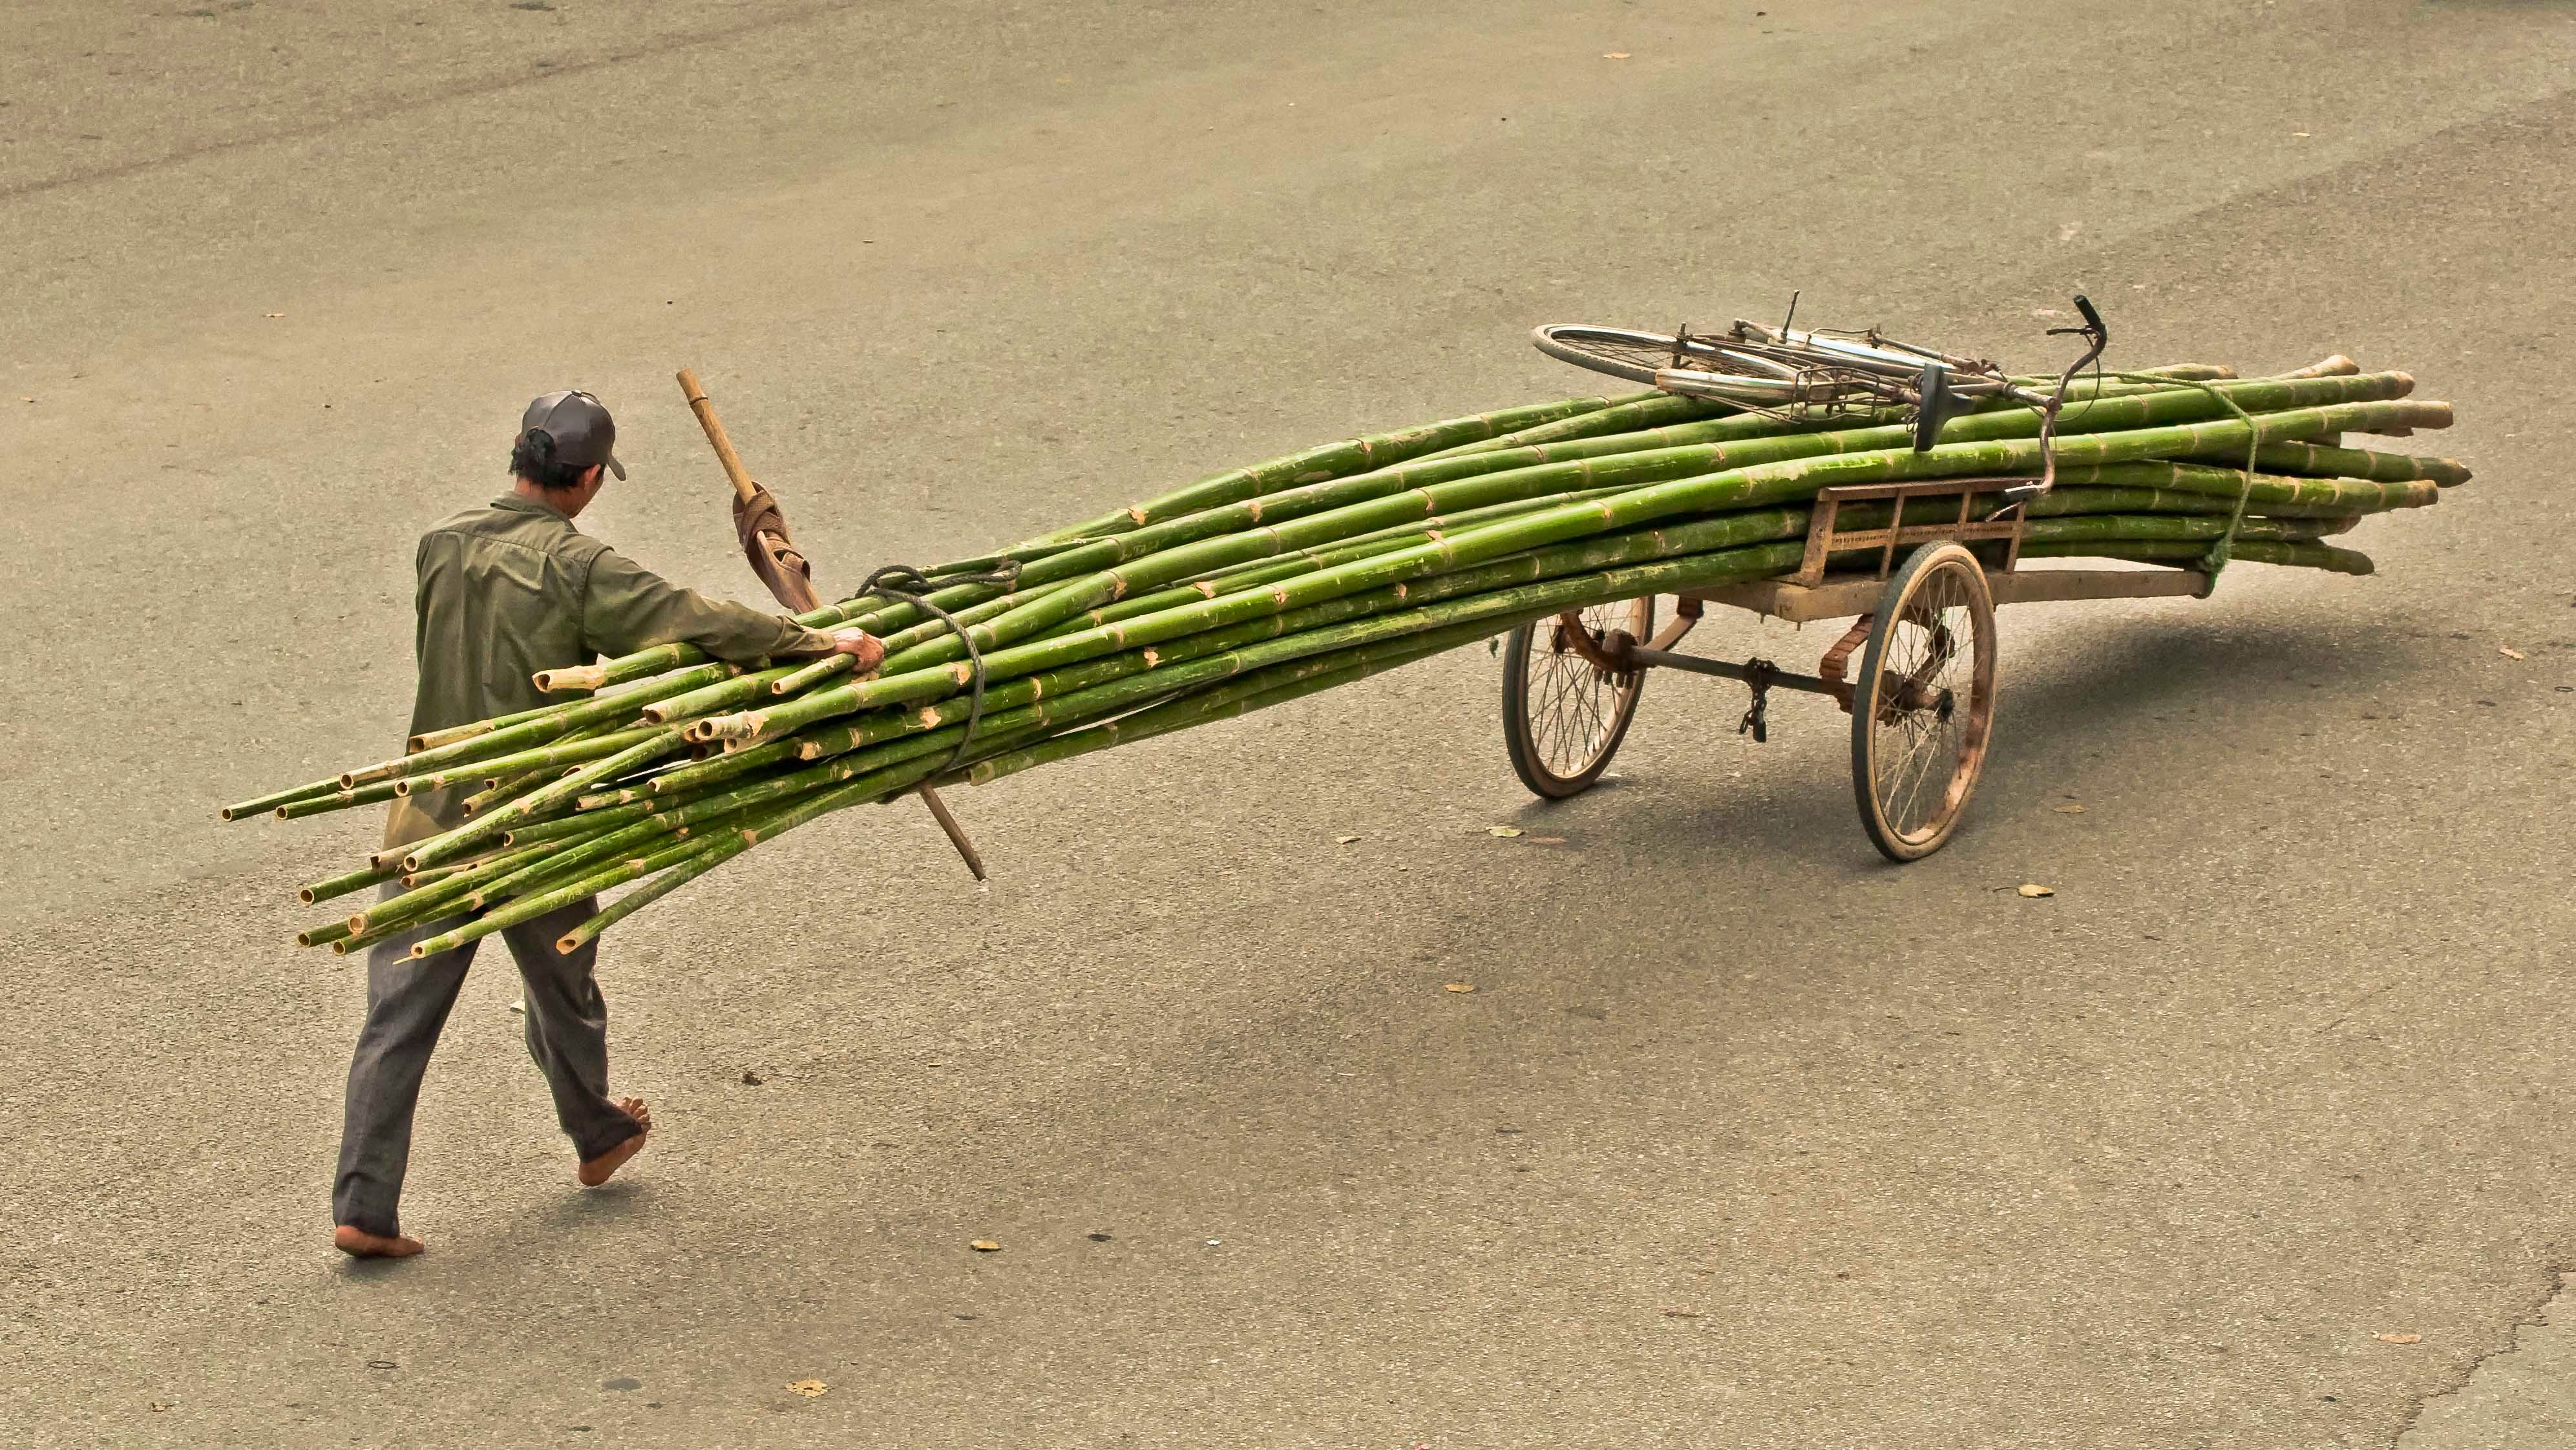 Man hauling Bamboo, Vietnam